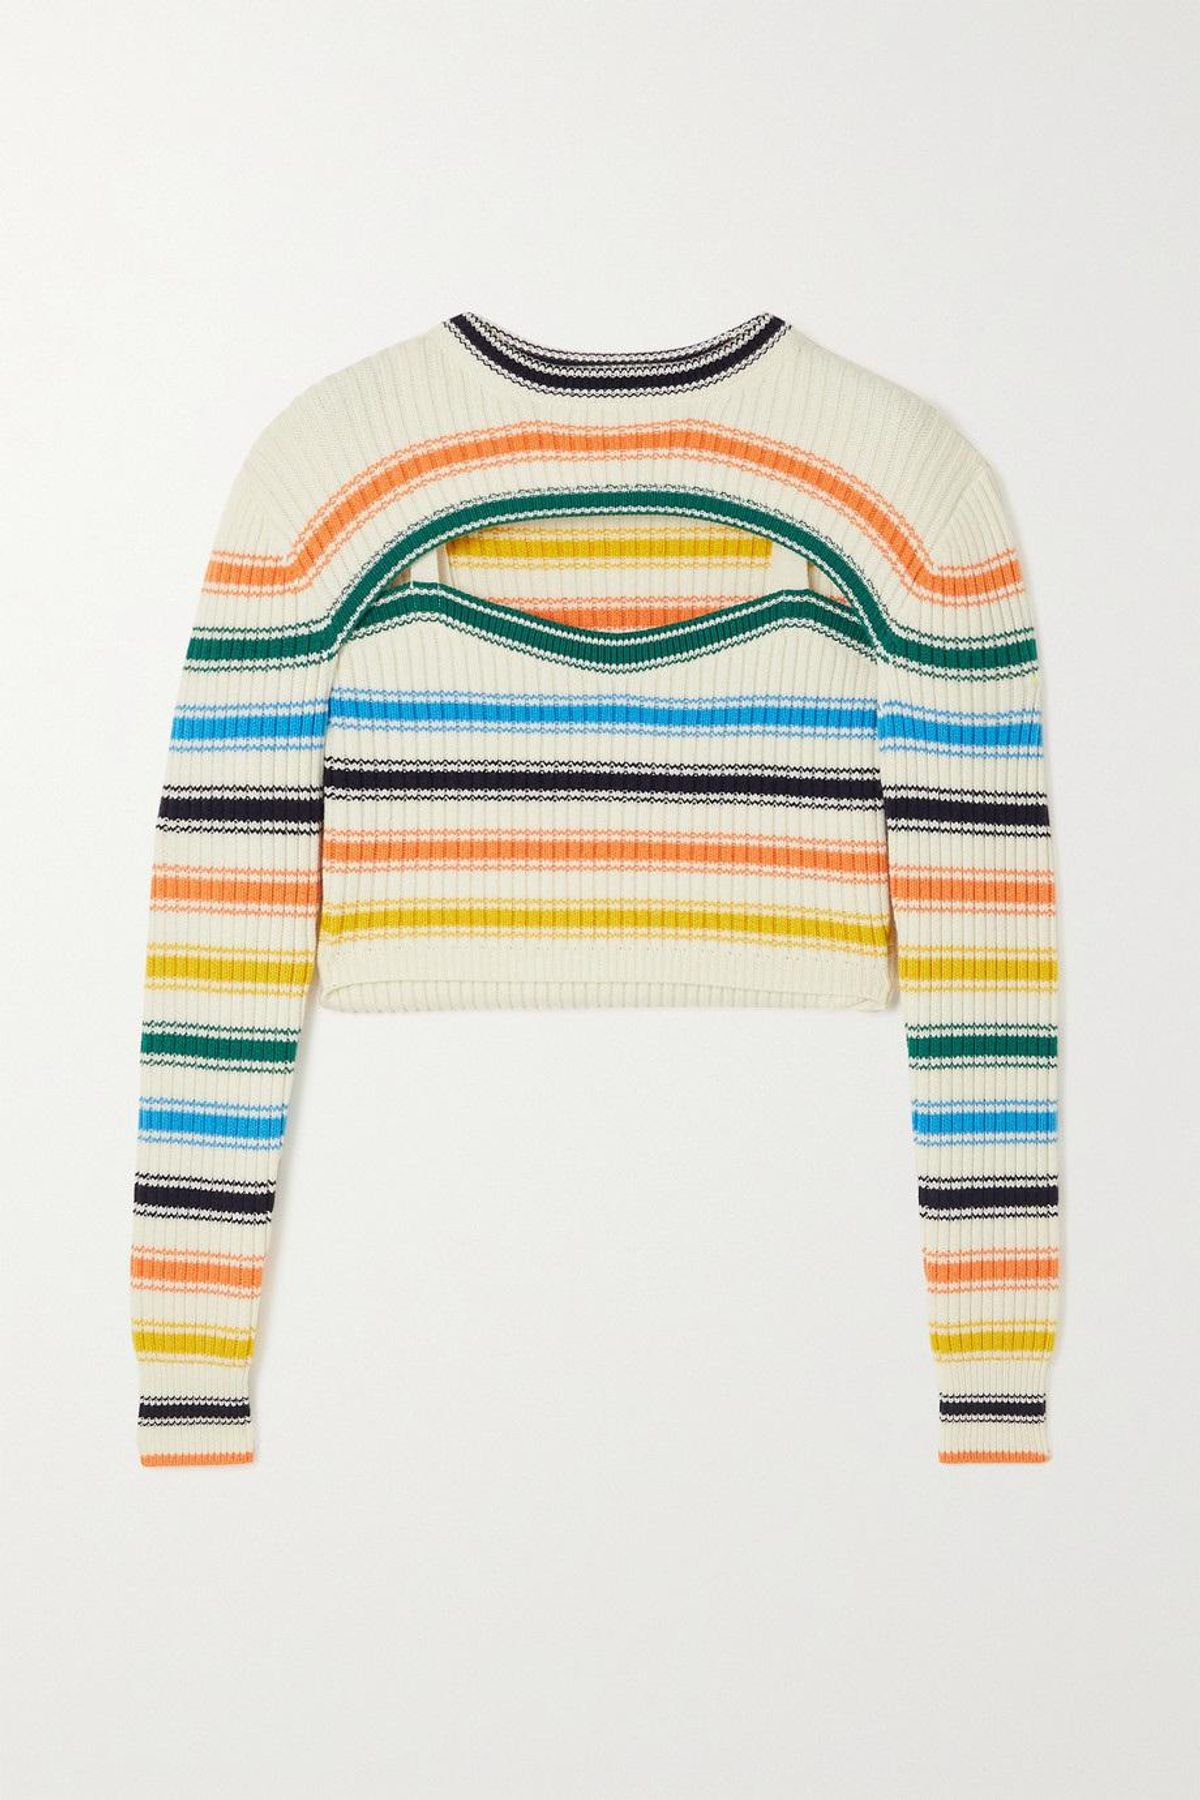 Thousand-in-One-Ways Rainbow Sweater